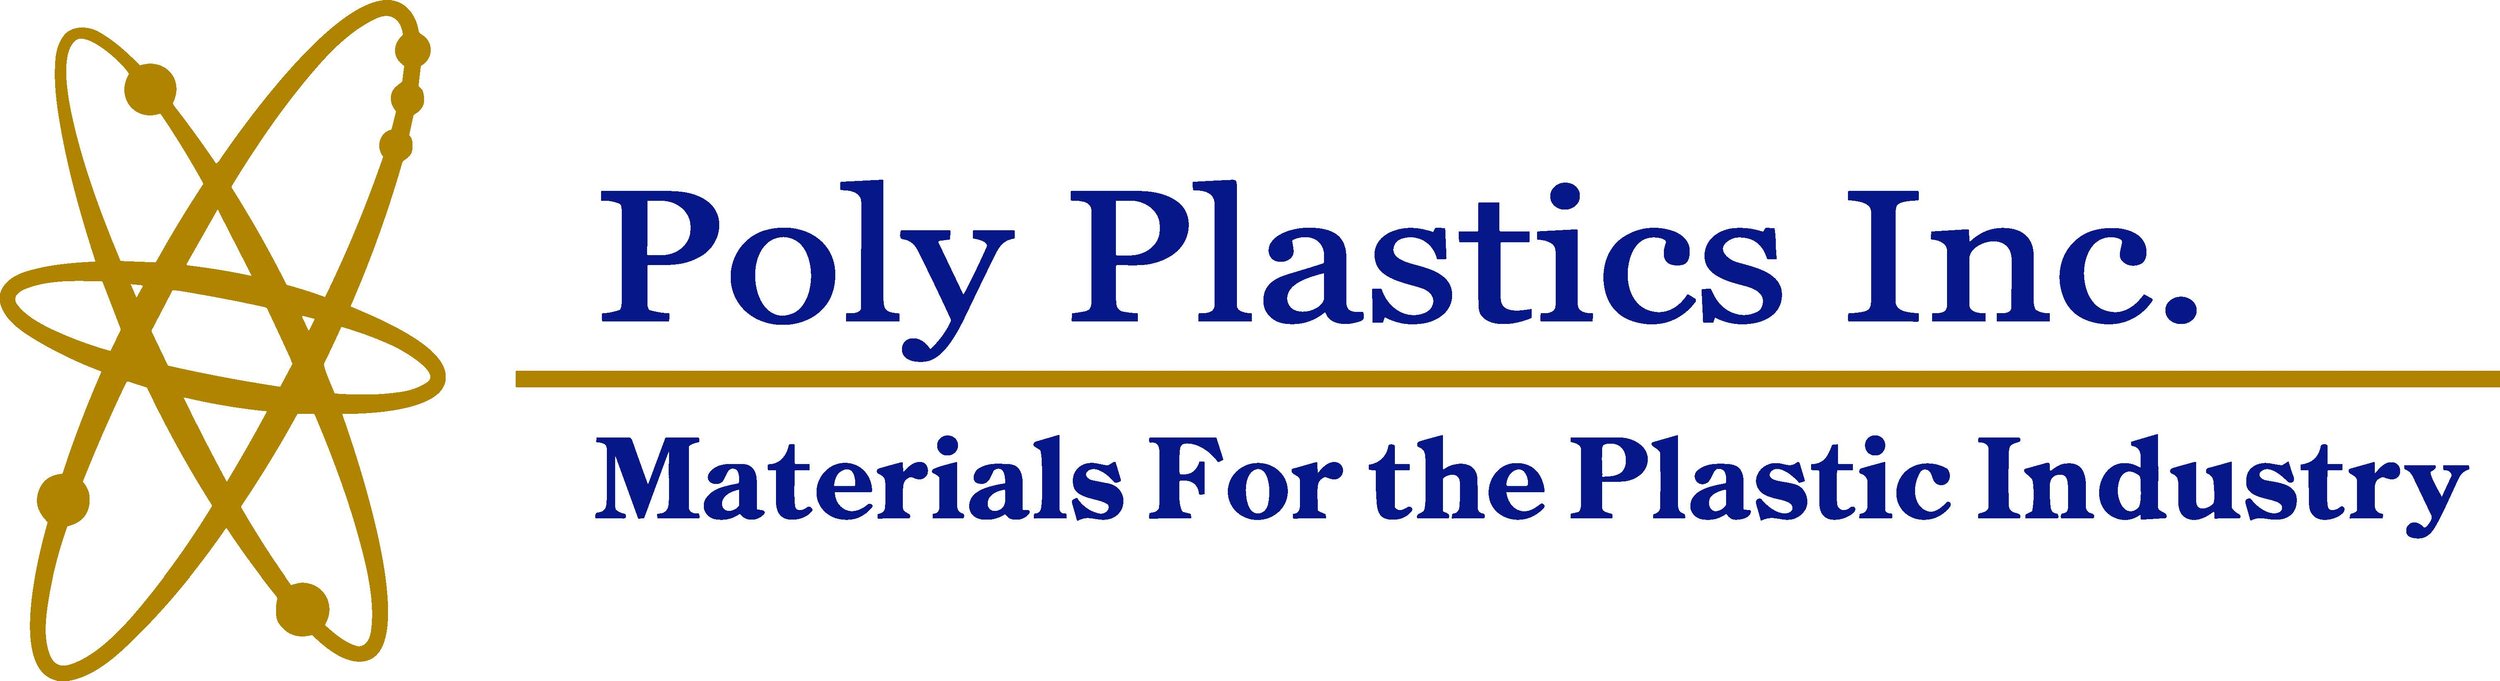 Poly Plastics Official Logo and Slogan.jpg